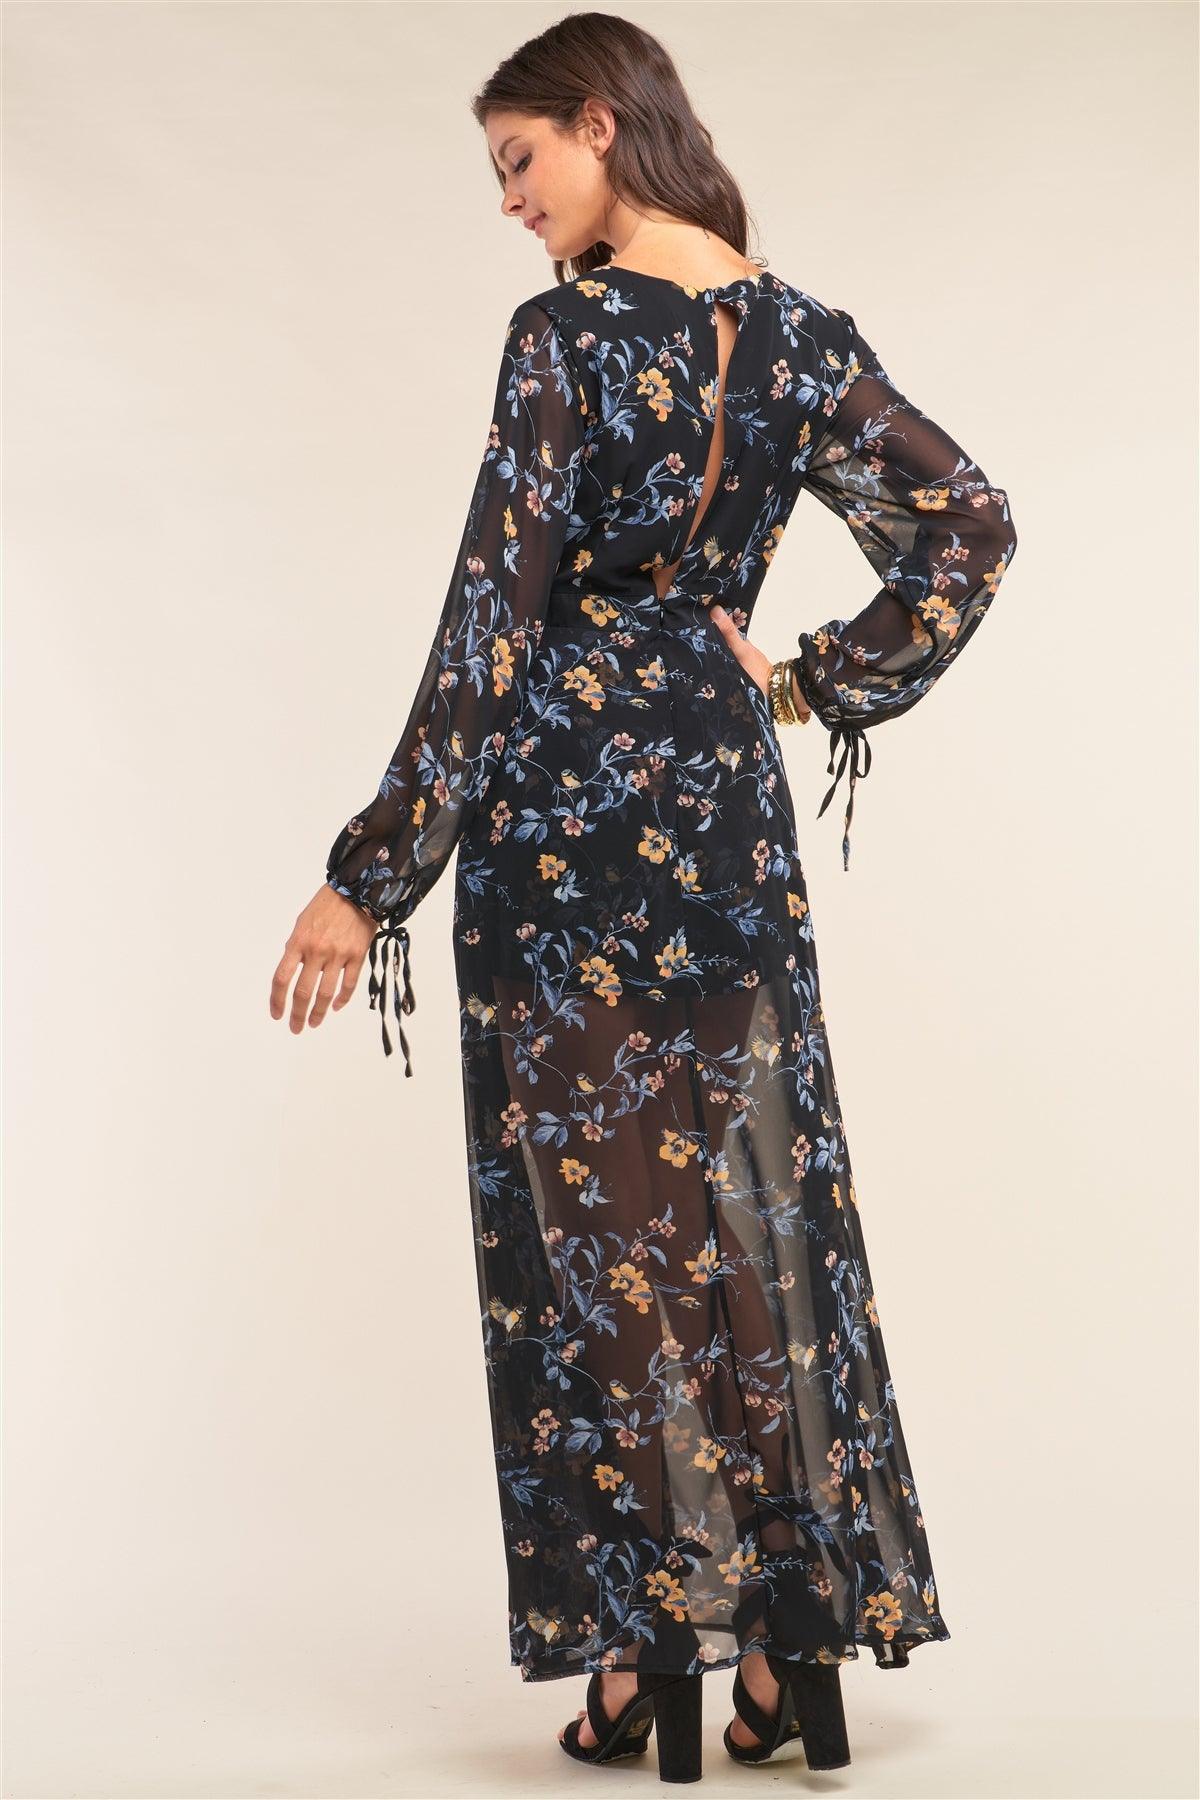 Black Multicolor Floral Print Wrap Deep Plunge V-Neck Long Sleeve Semi-Dress Romper